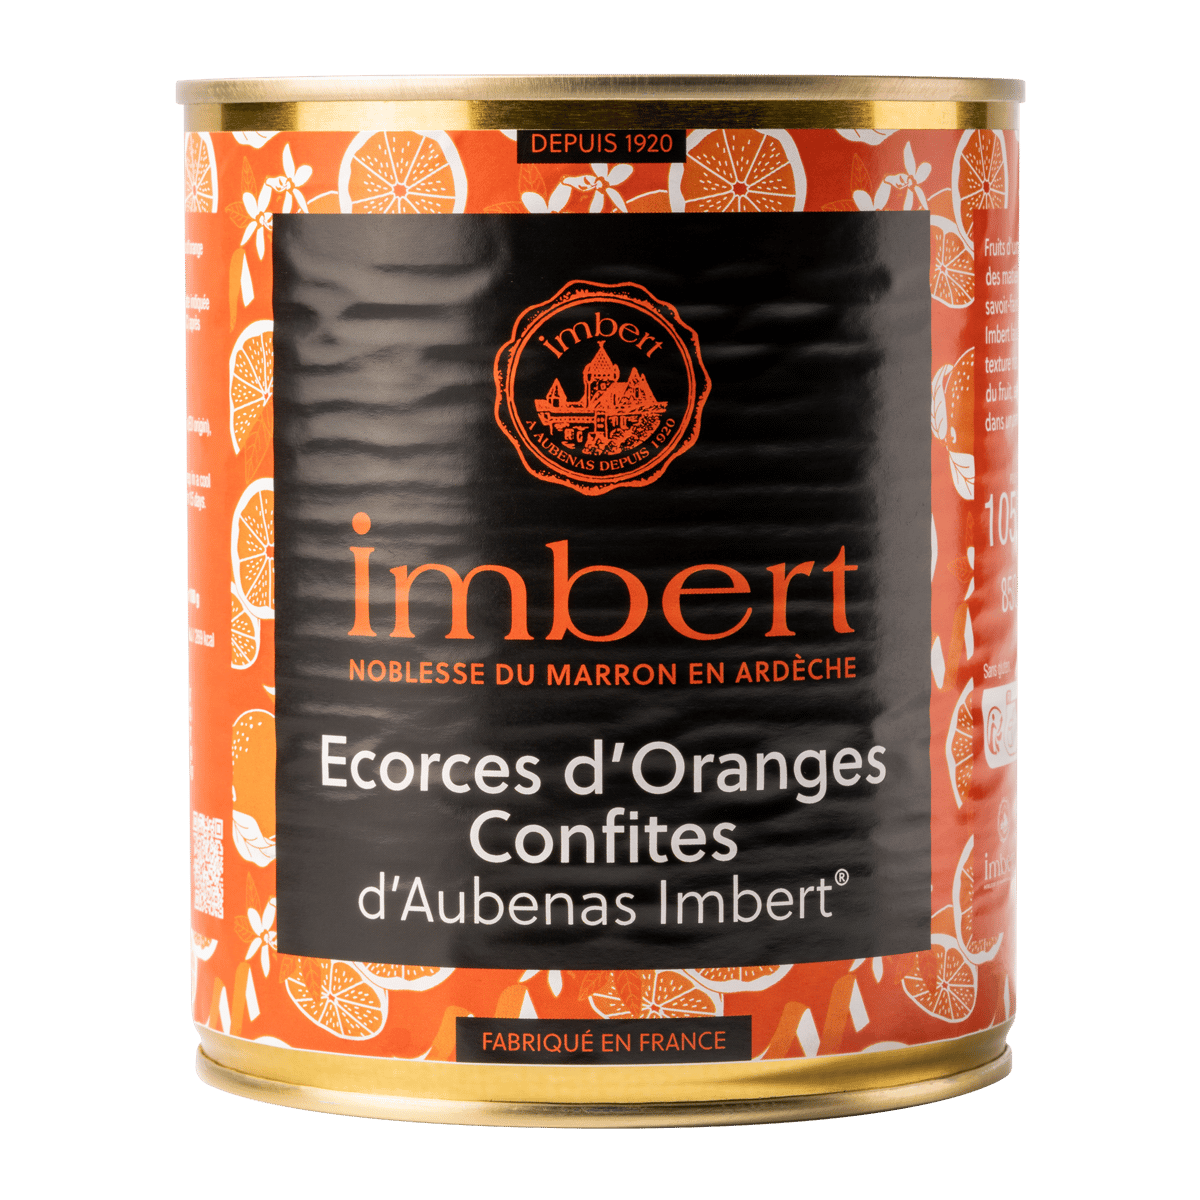 https://www.marrons-imbert.com/wp-content/uploads/2019/05/Imbert-FR-ecorces_oranges-boite44-detouree.png